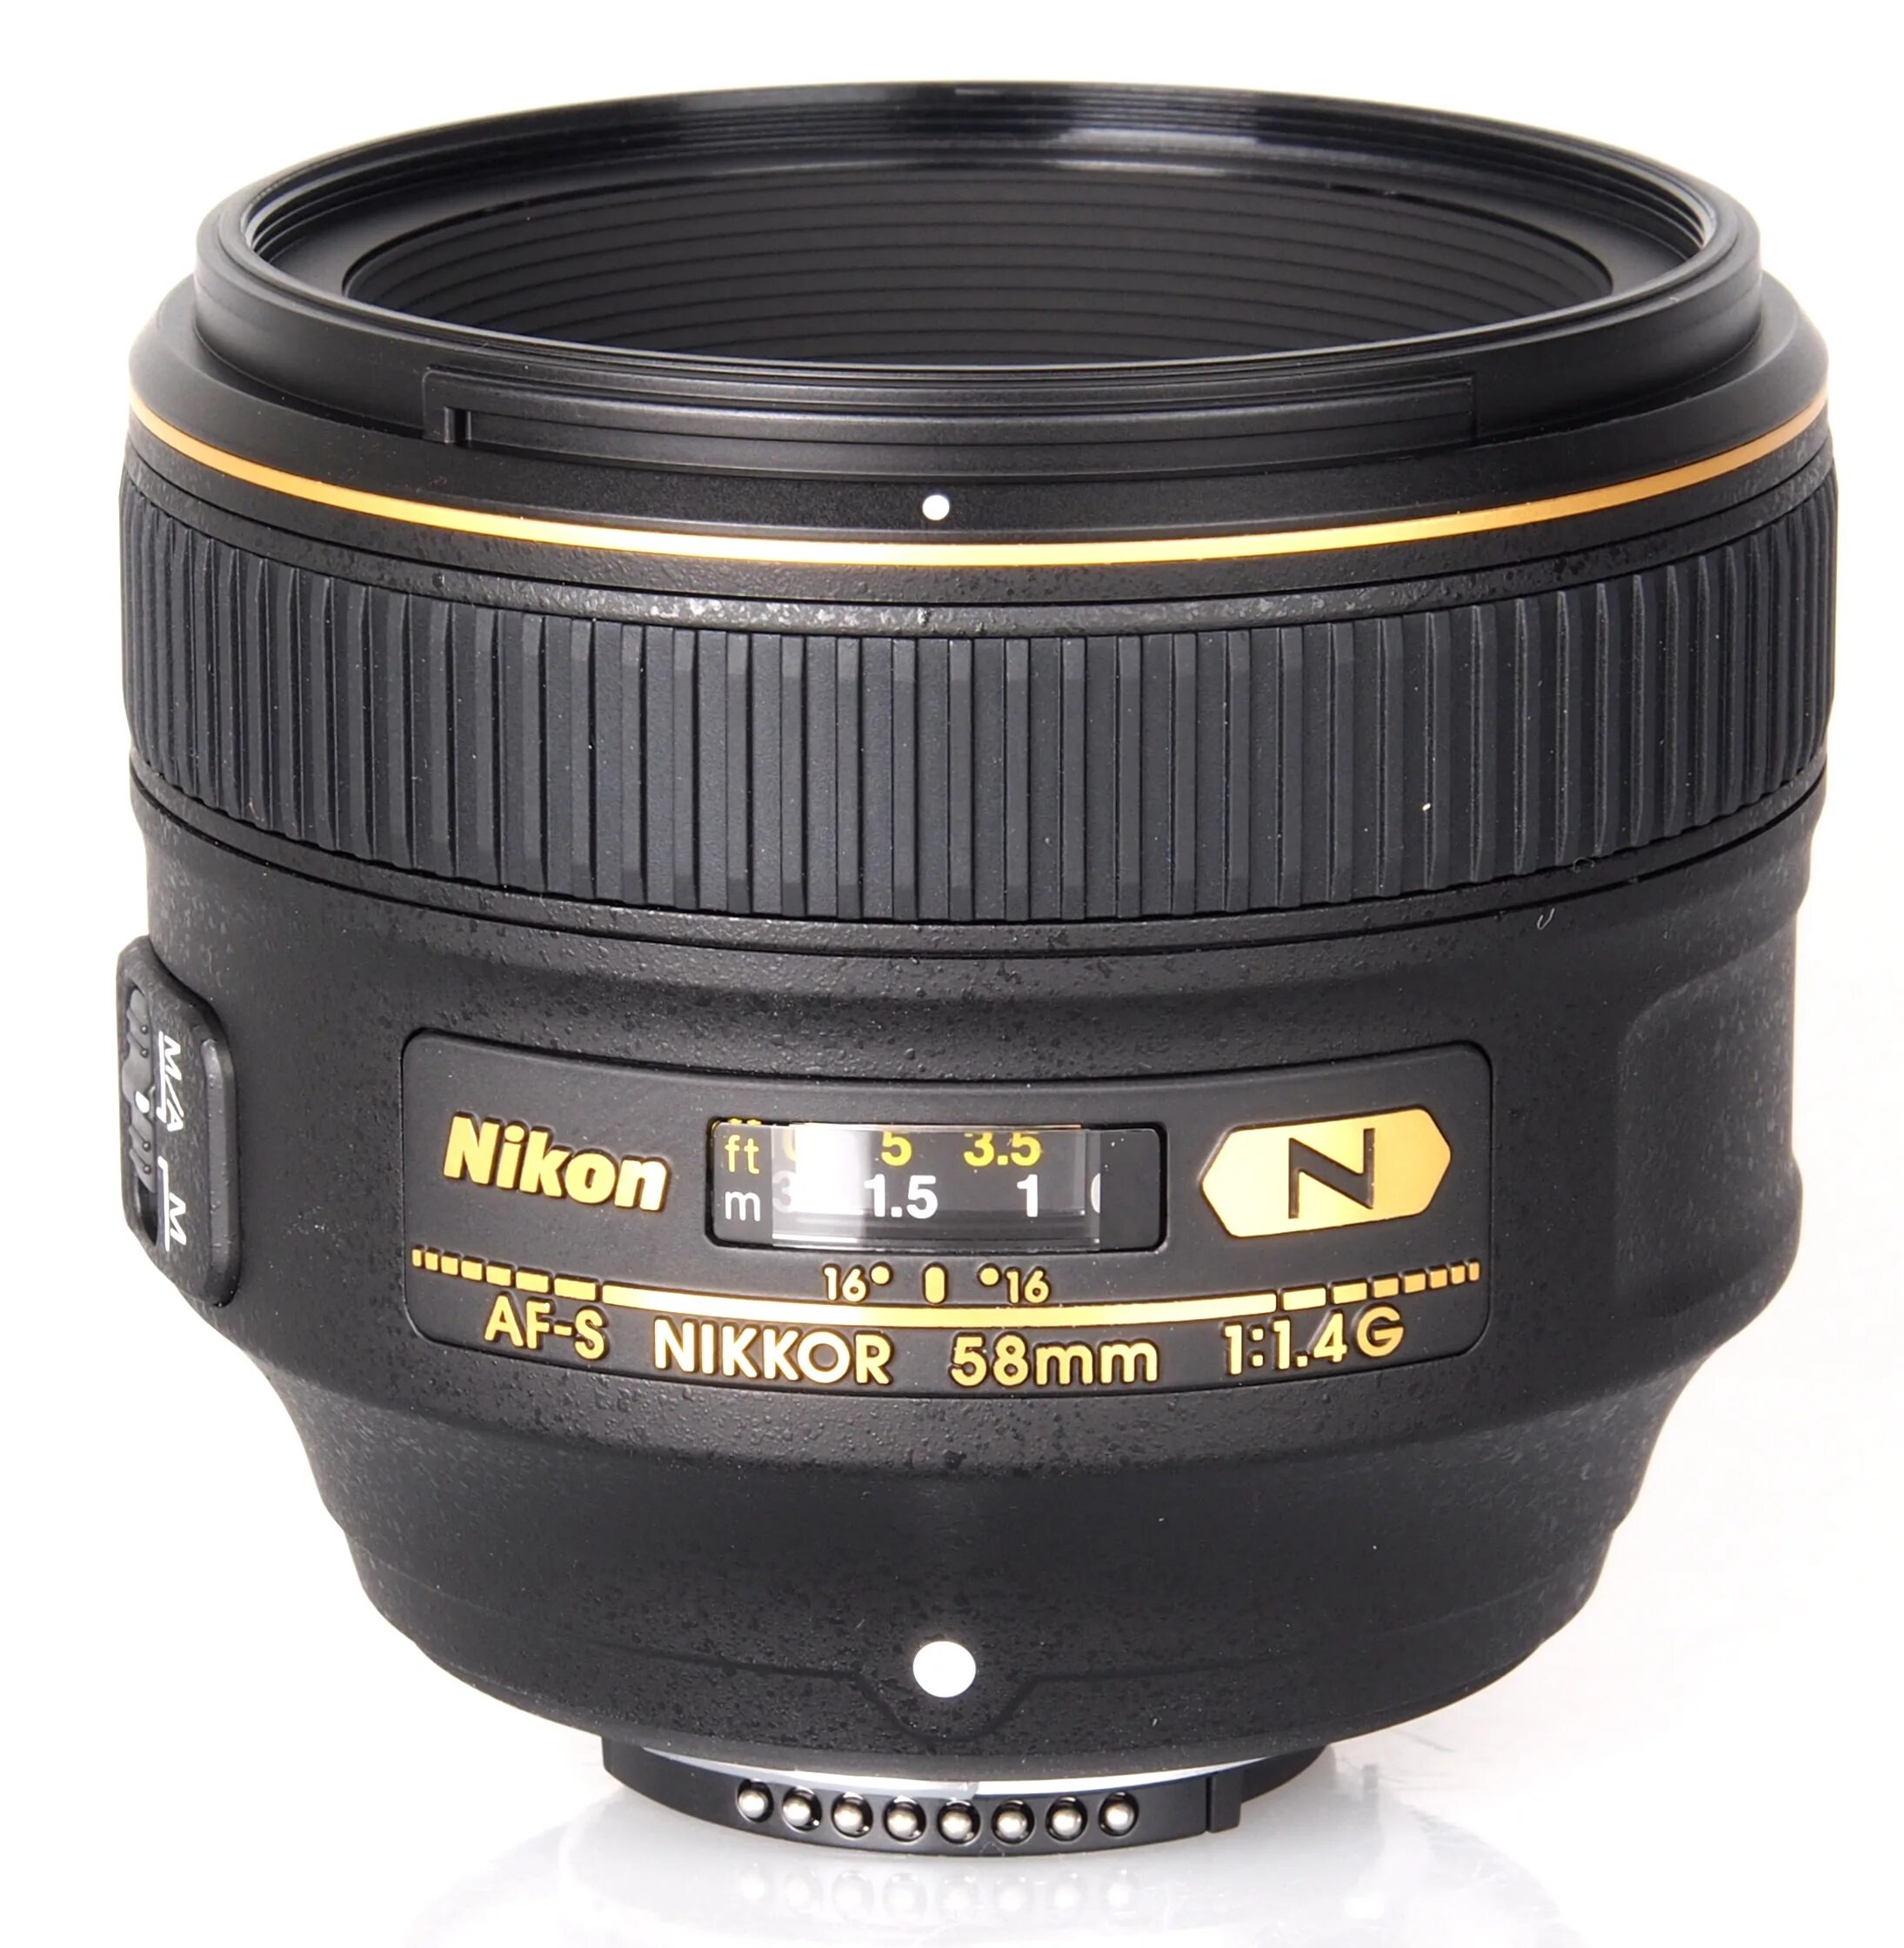 Af s nikon f 1.4. Nikon af-s 58mm/1.4g. Объектив Nikon 58mm f/1.4g af-s Nikkor. Nikon af-s 35 f/1.4g Nikkor. Nikon 35mm f/1.4g af-s Nikkor.